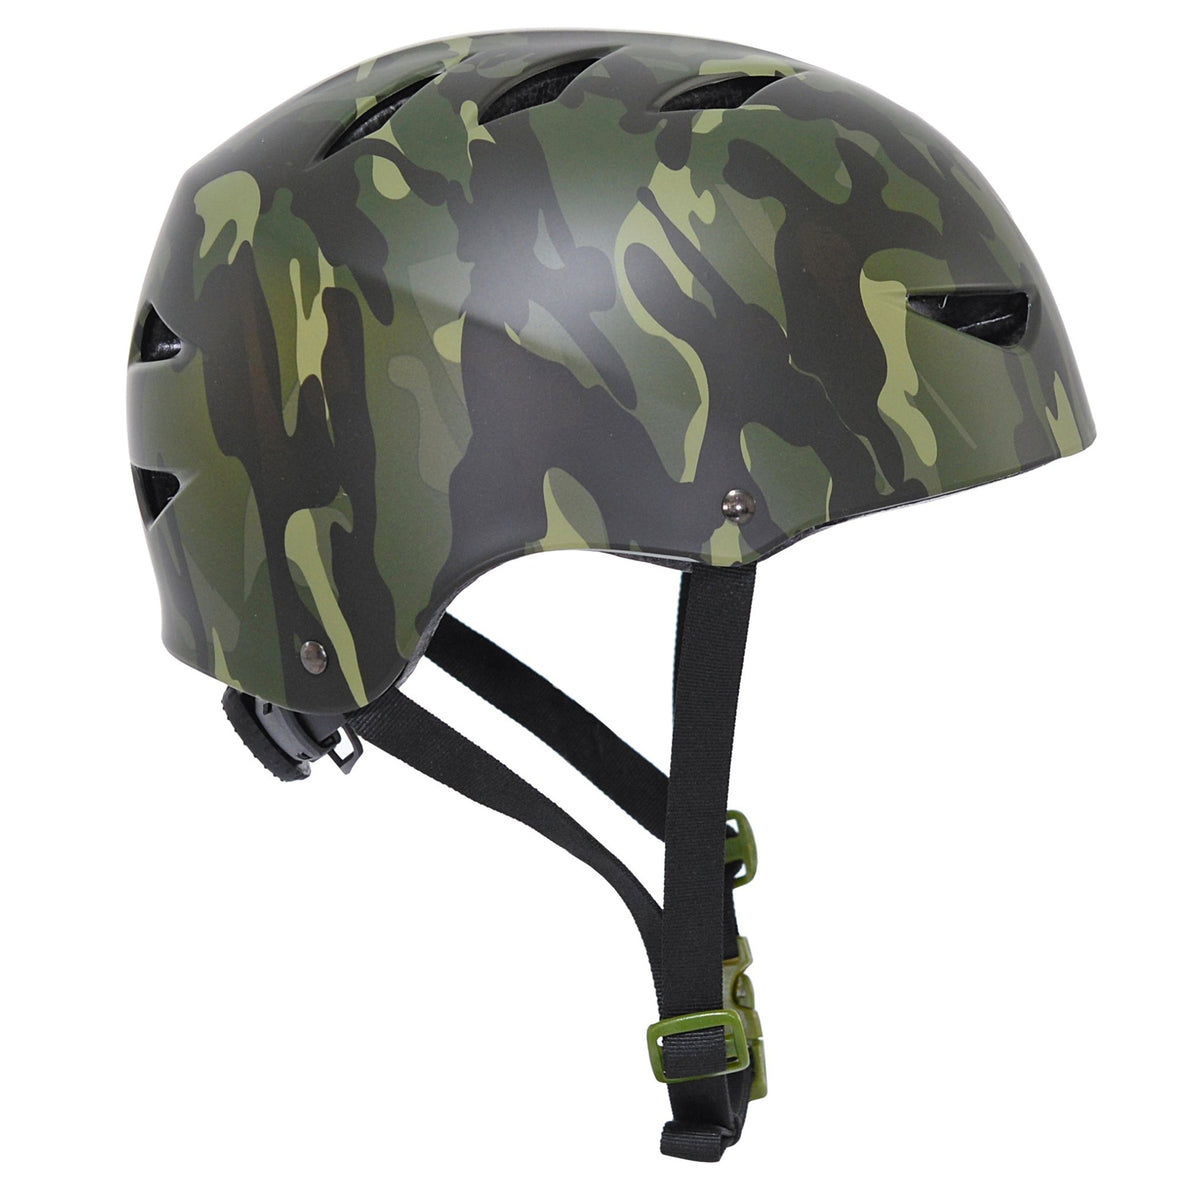 Kent Green Camo Youth Multi-Sport Helmet | Helmet for Kids Ages 8+